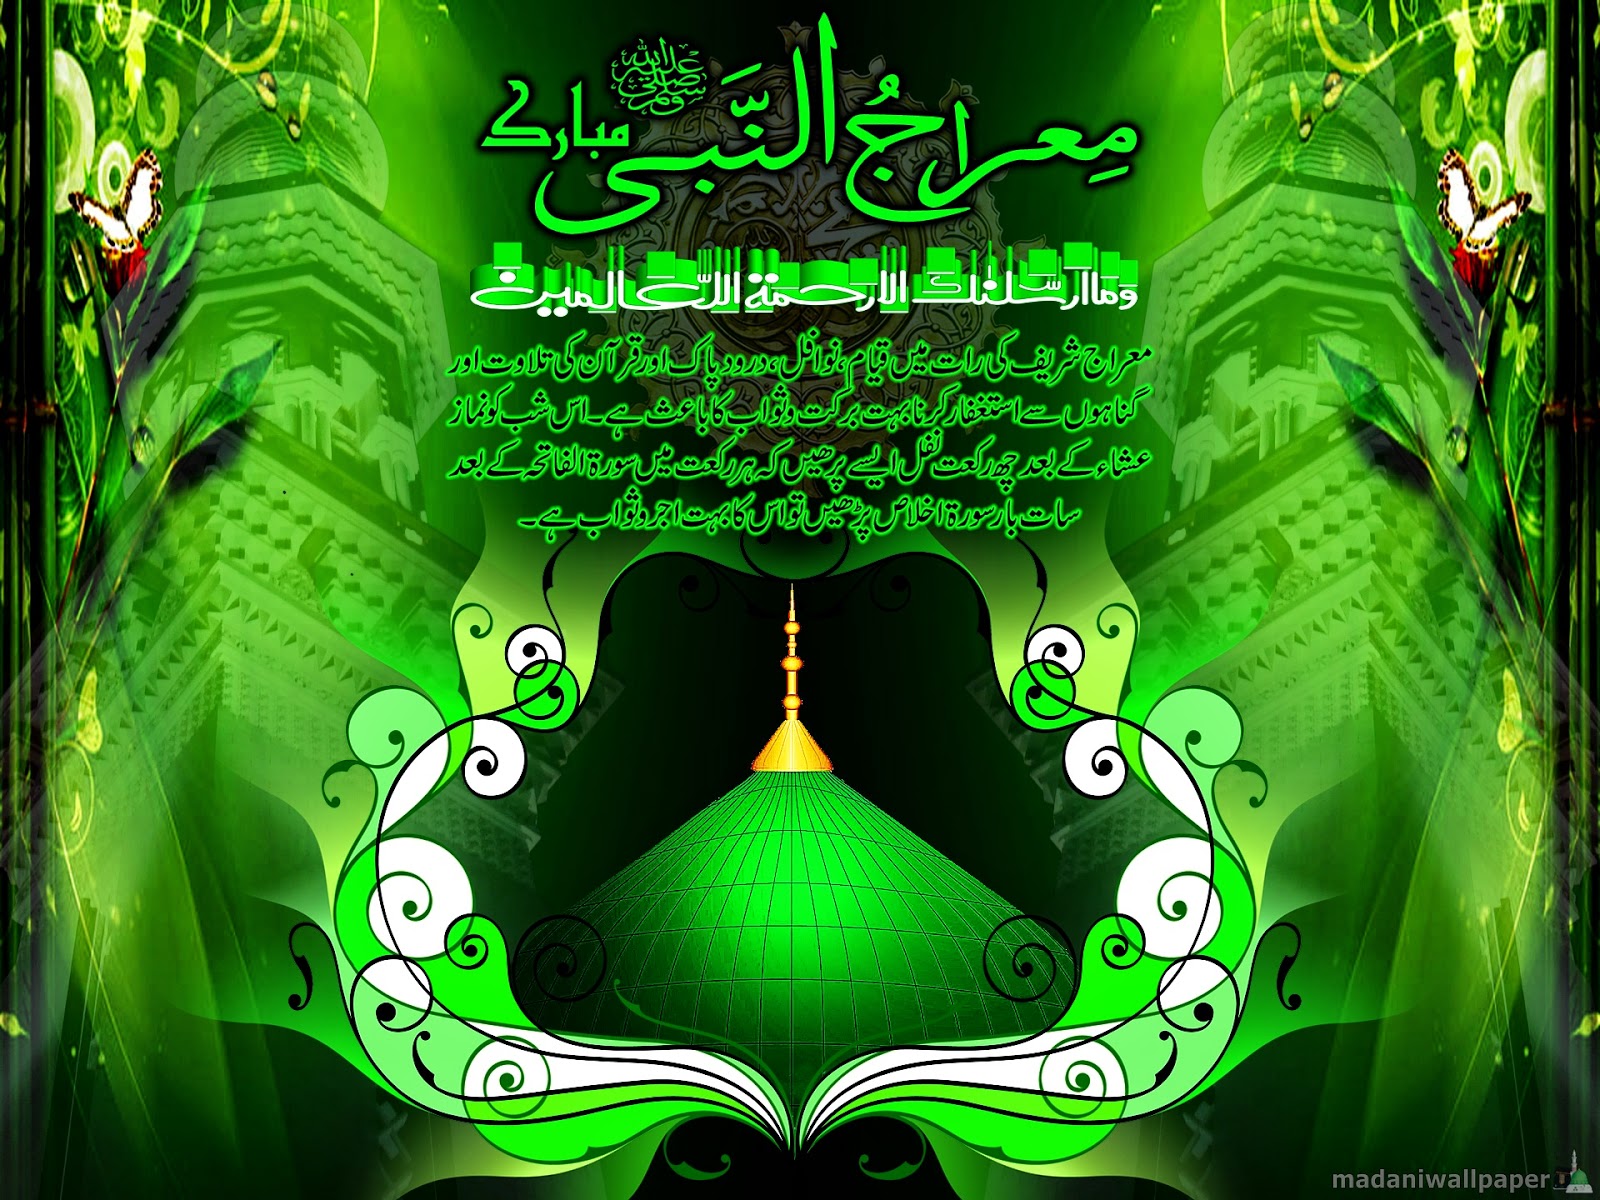  Green  Islamic  Wallpaper  Islamic  Wallpaper  Hd Quotes 